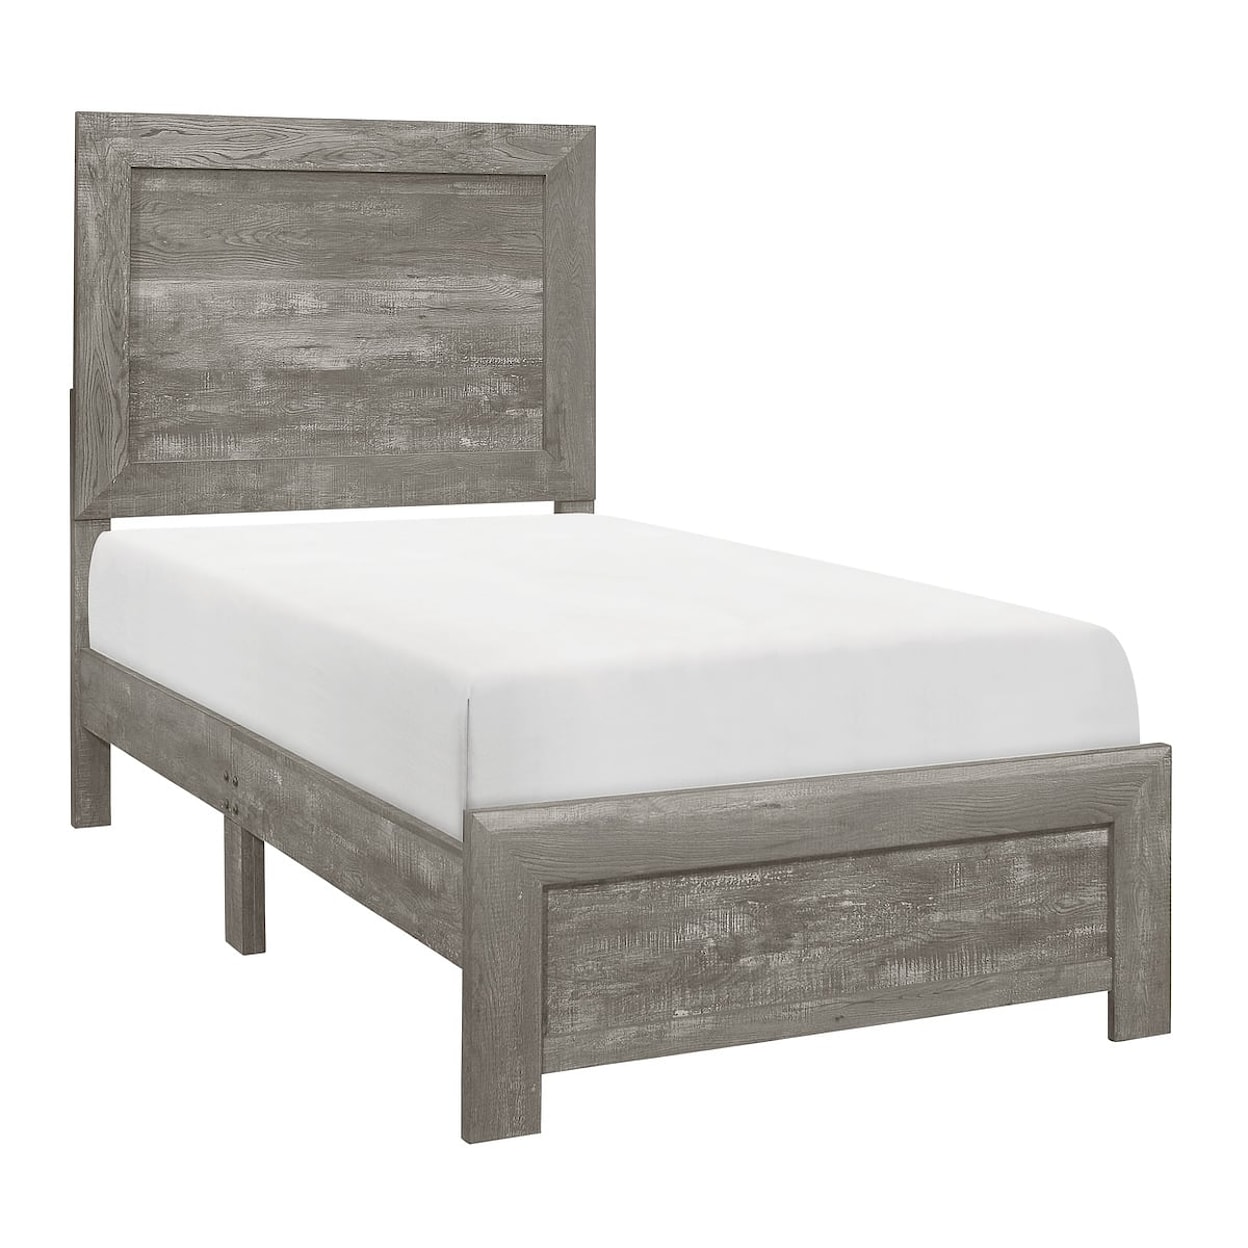 Homelegance Furniture Corbin Twin Bed in a Box